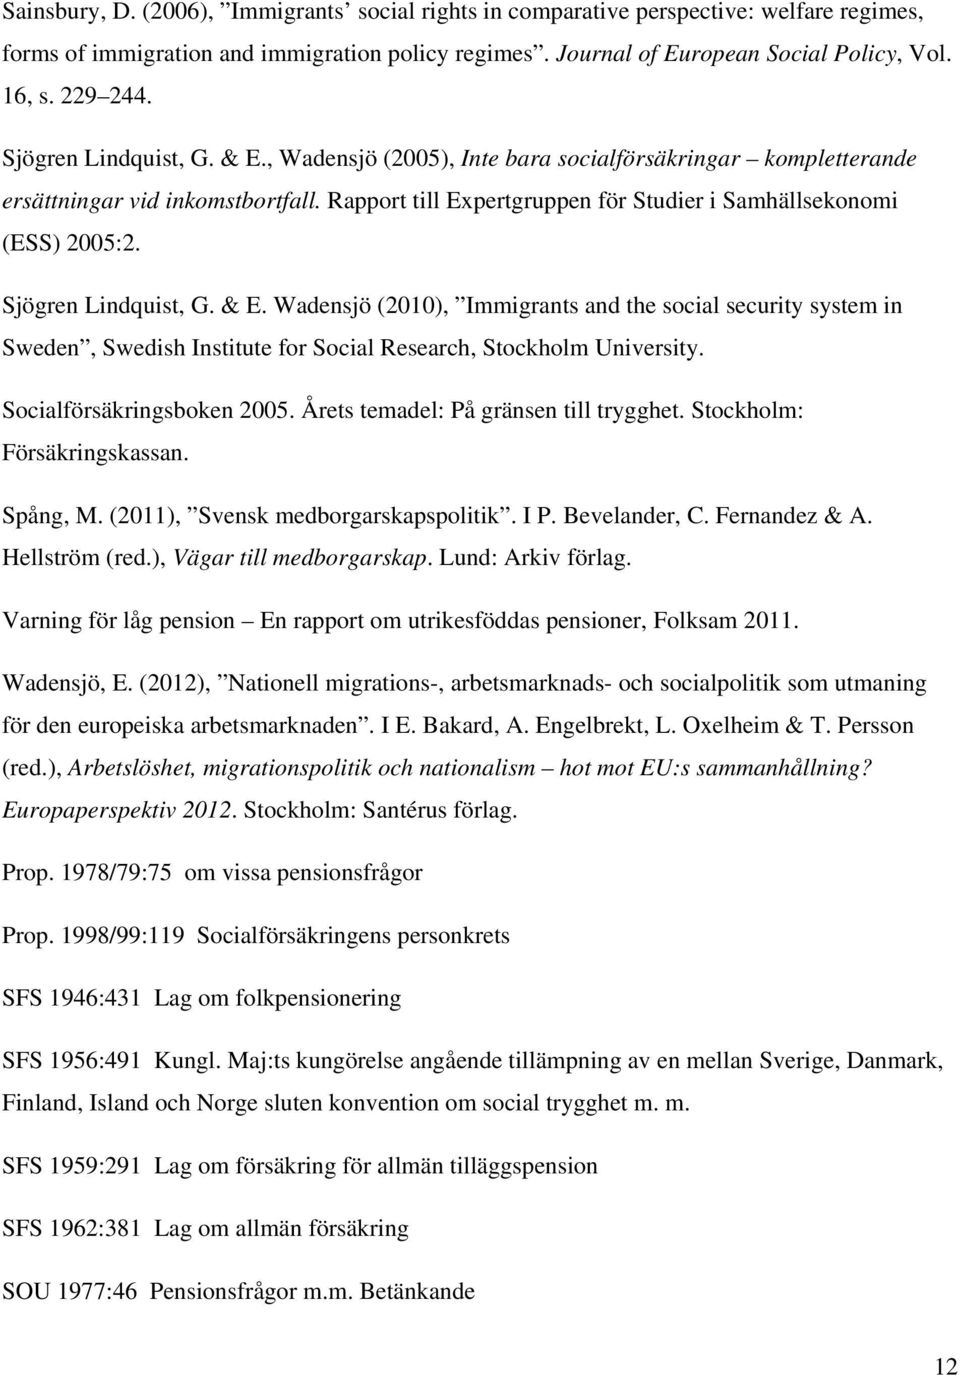 Sjögren Lindquist, G. & E. Wadensjö (2010), Immigrants and the social security system in Sweden, Swedish Institute for Social Research, Stockholm University. Socialförsäkringsboken 2005.